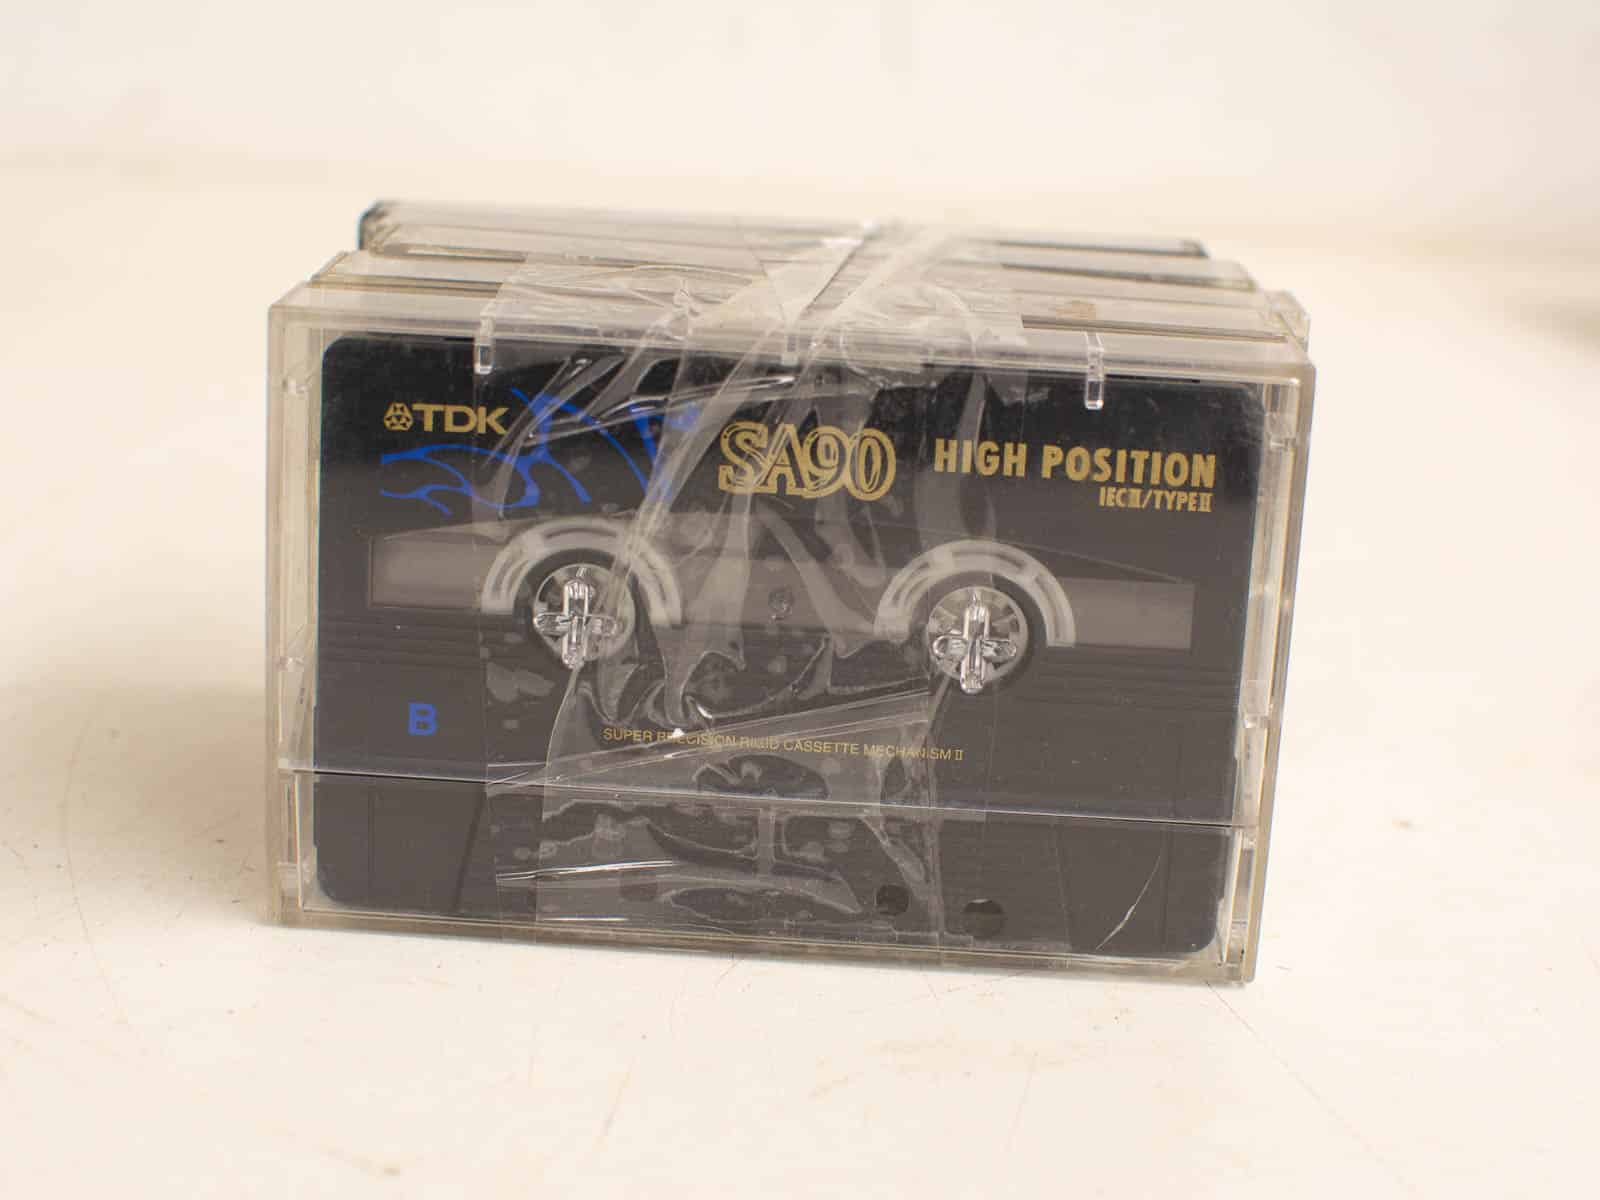 5 cassettebandjes  27663